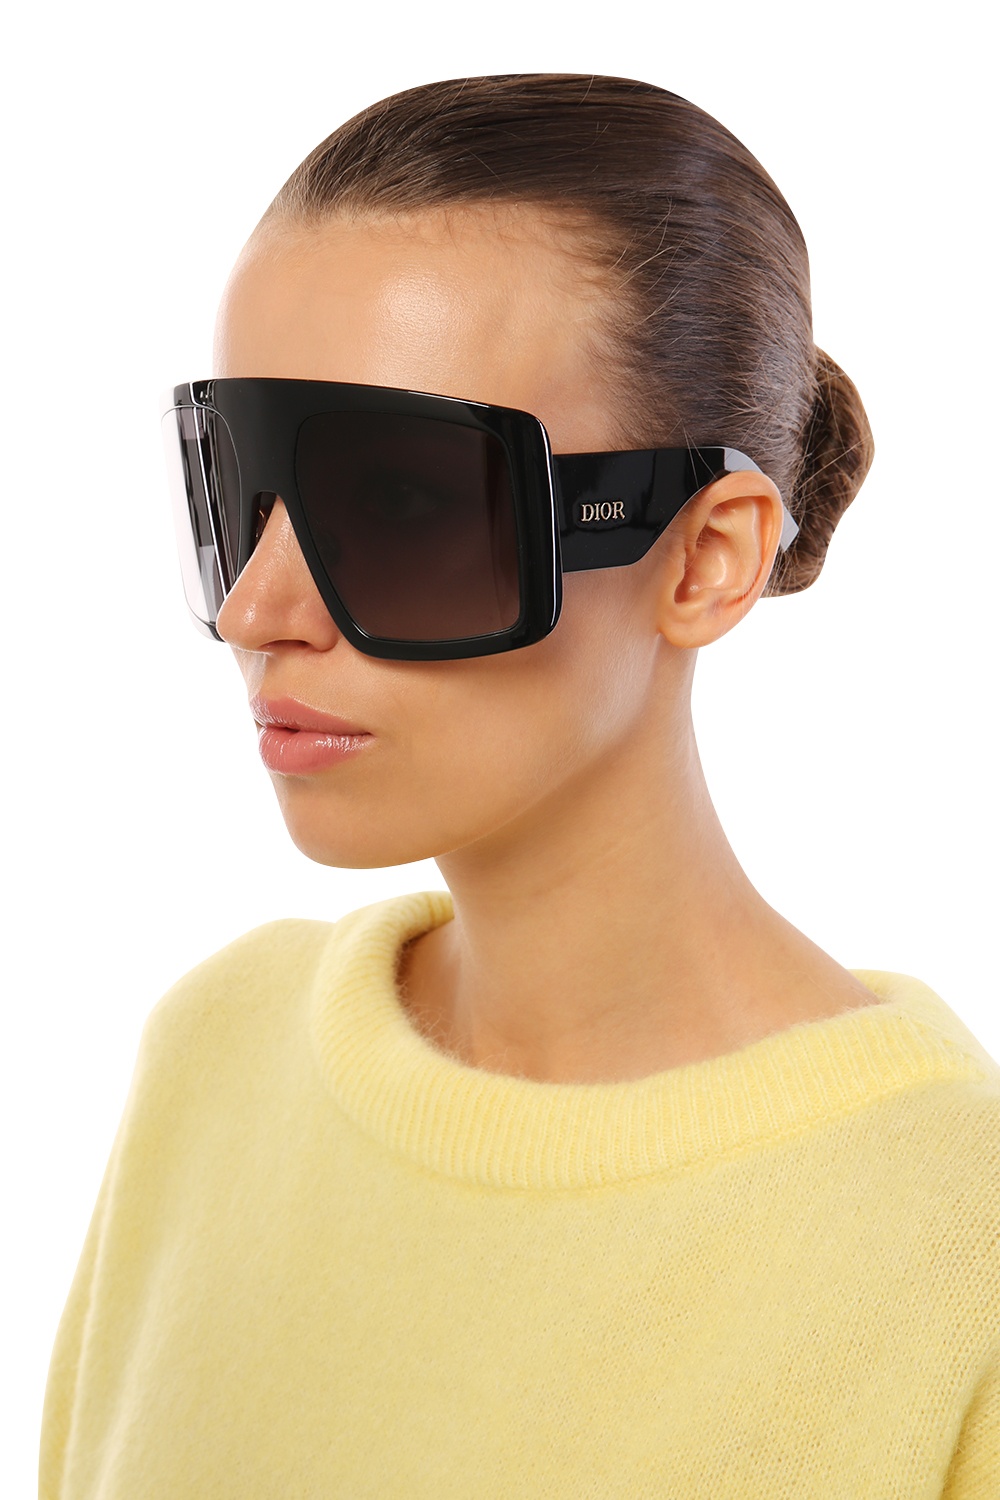 dior solight 1 sunglasses